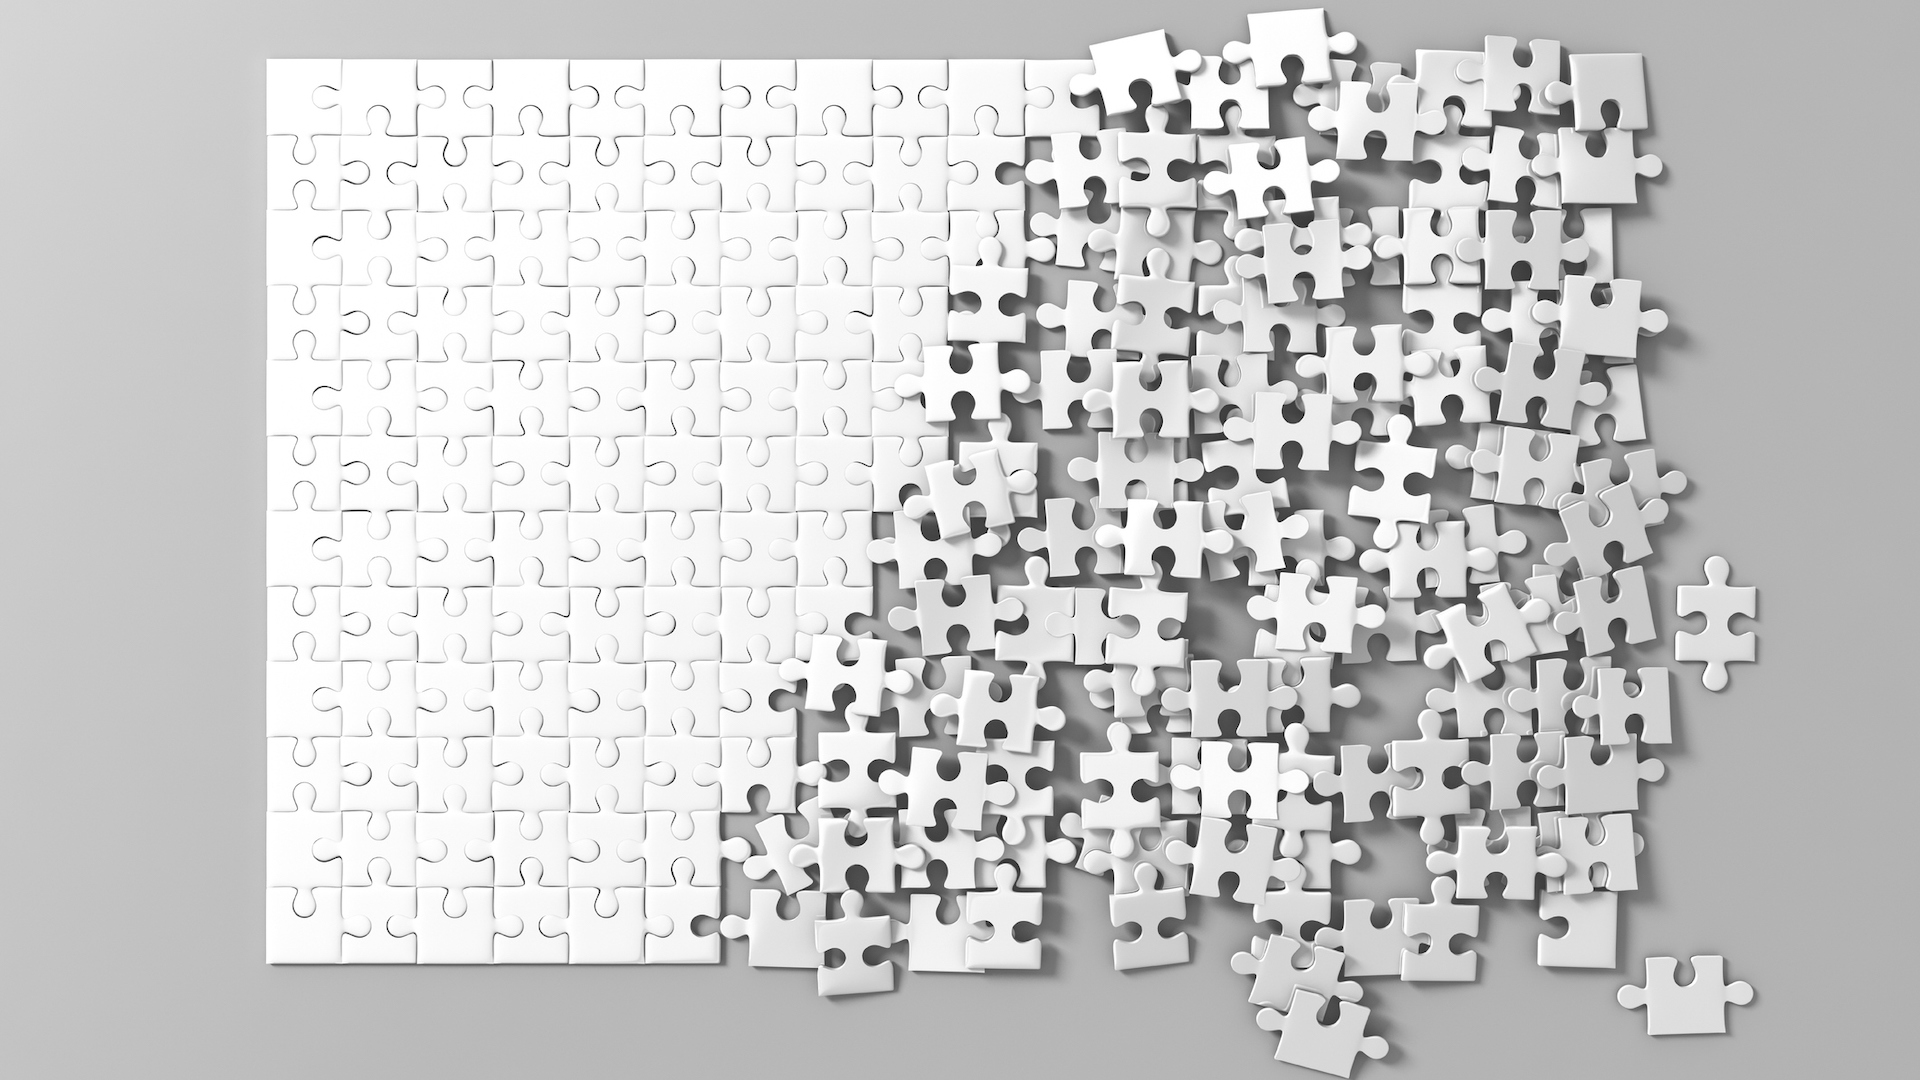 A blank jigsaw puzzle